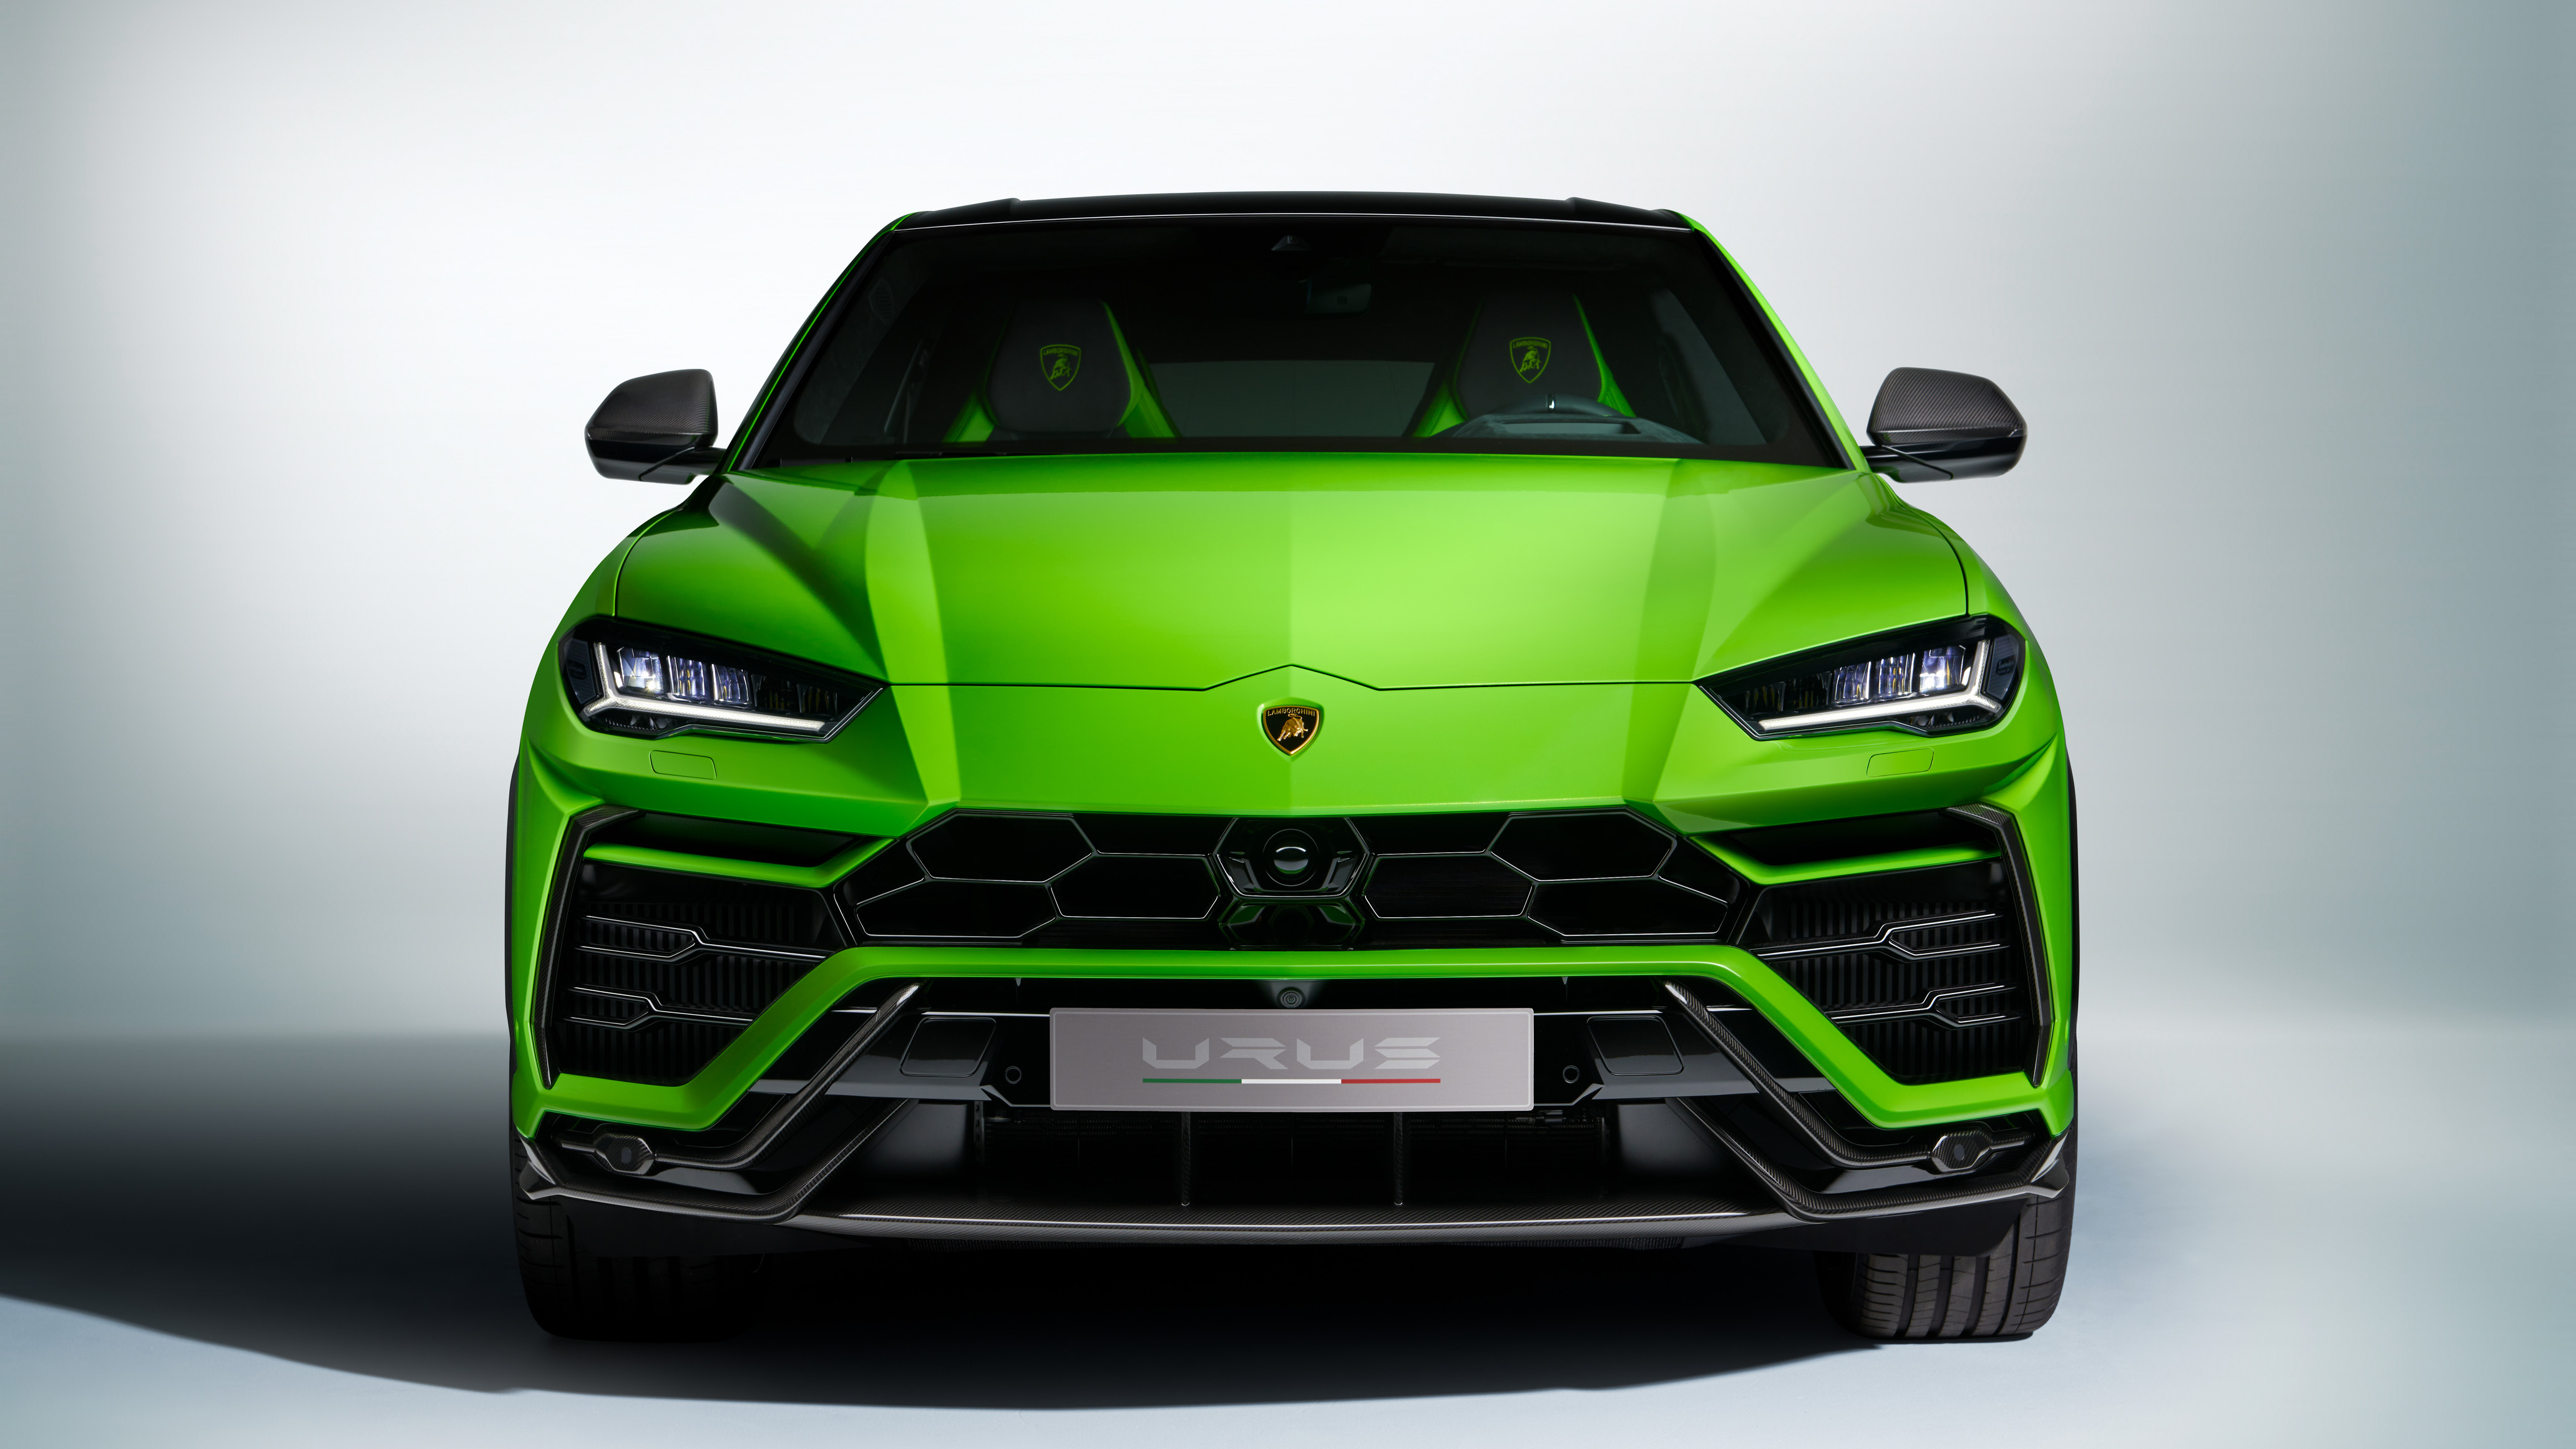 HD desktop wallpaper: Lamborghini, Car, Suv, Lamborghini Urus, Vehicles,  Green Car download free picture #483830